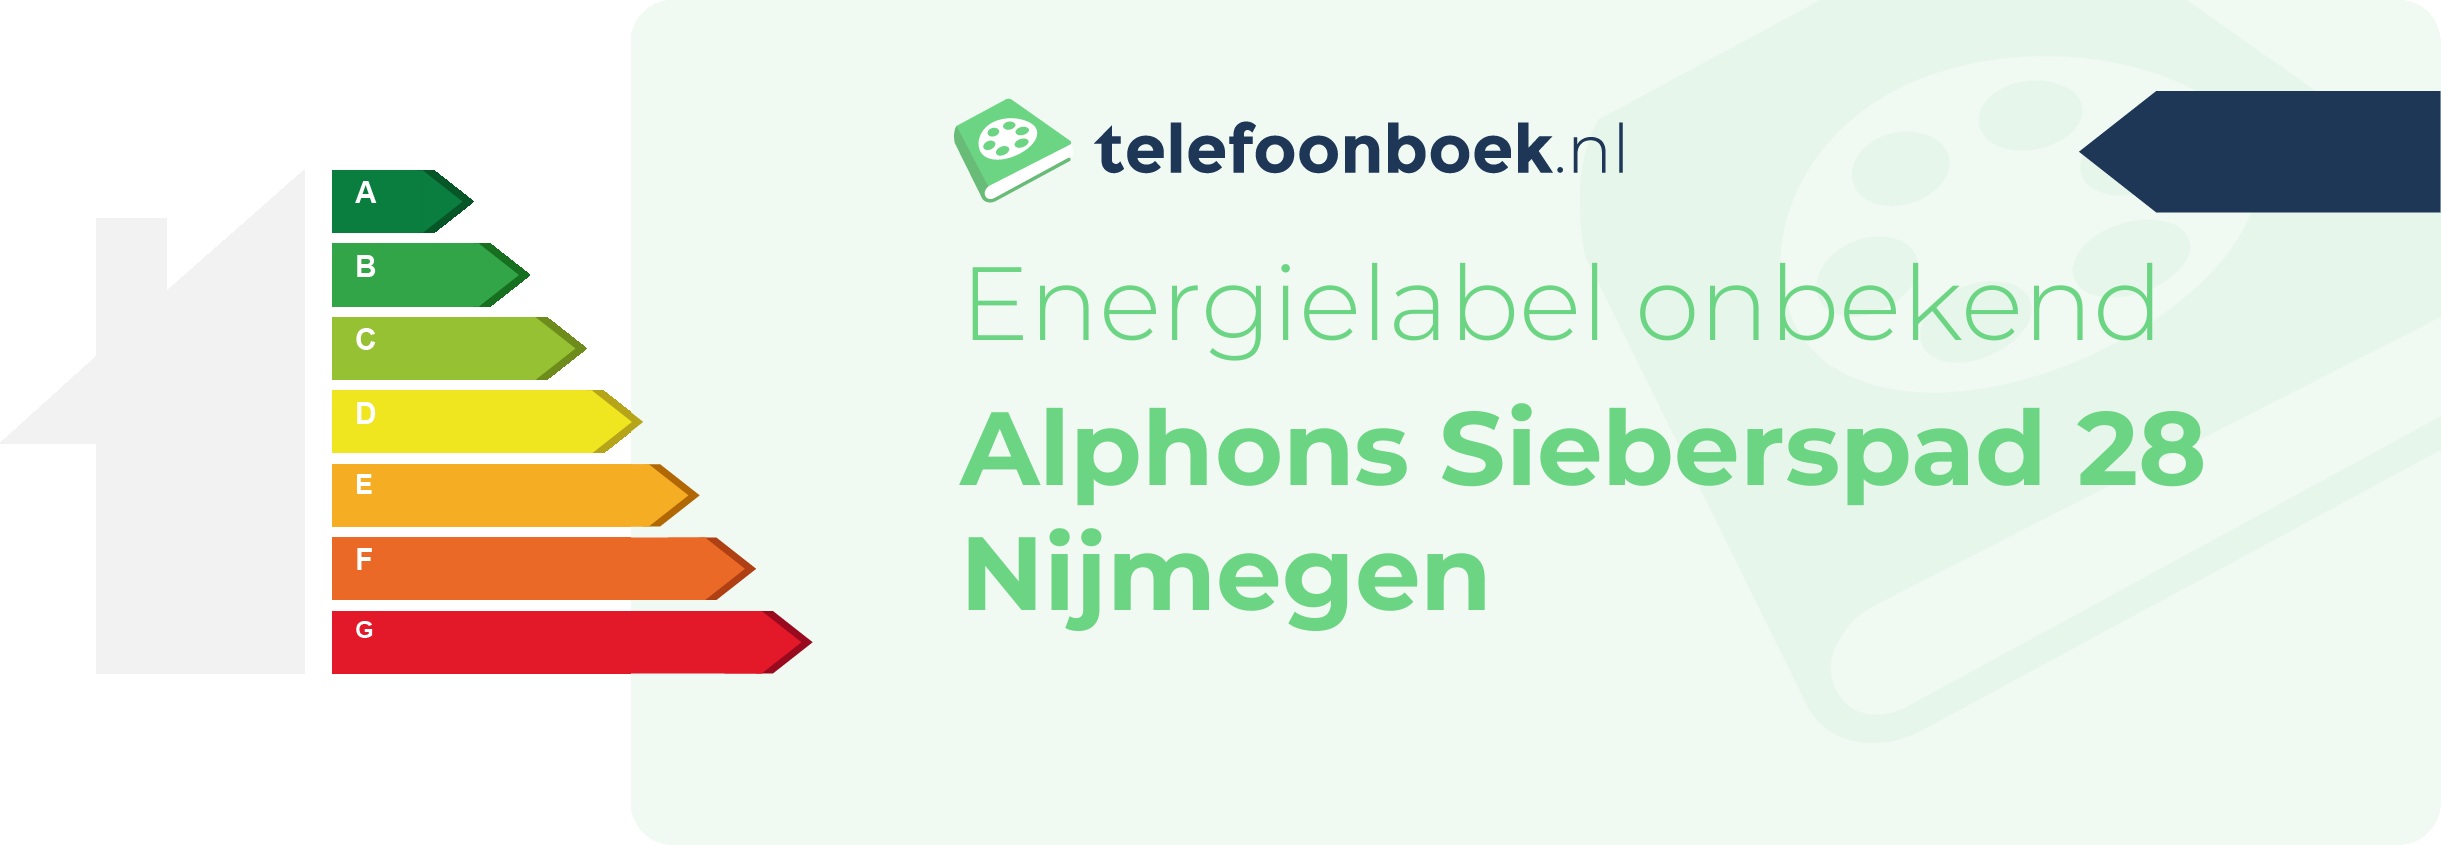 Energielabel Alphons Sieberspad 28 Nijmegen